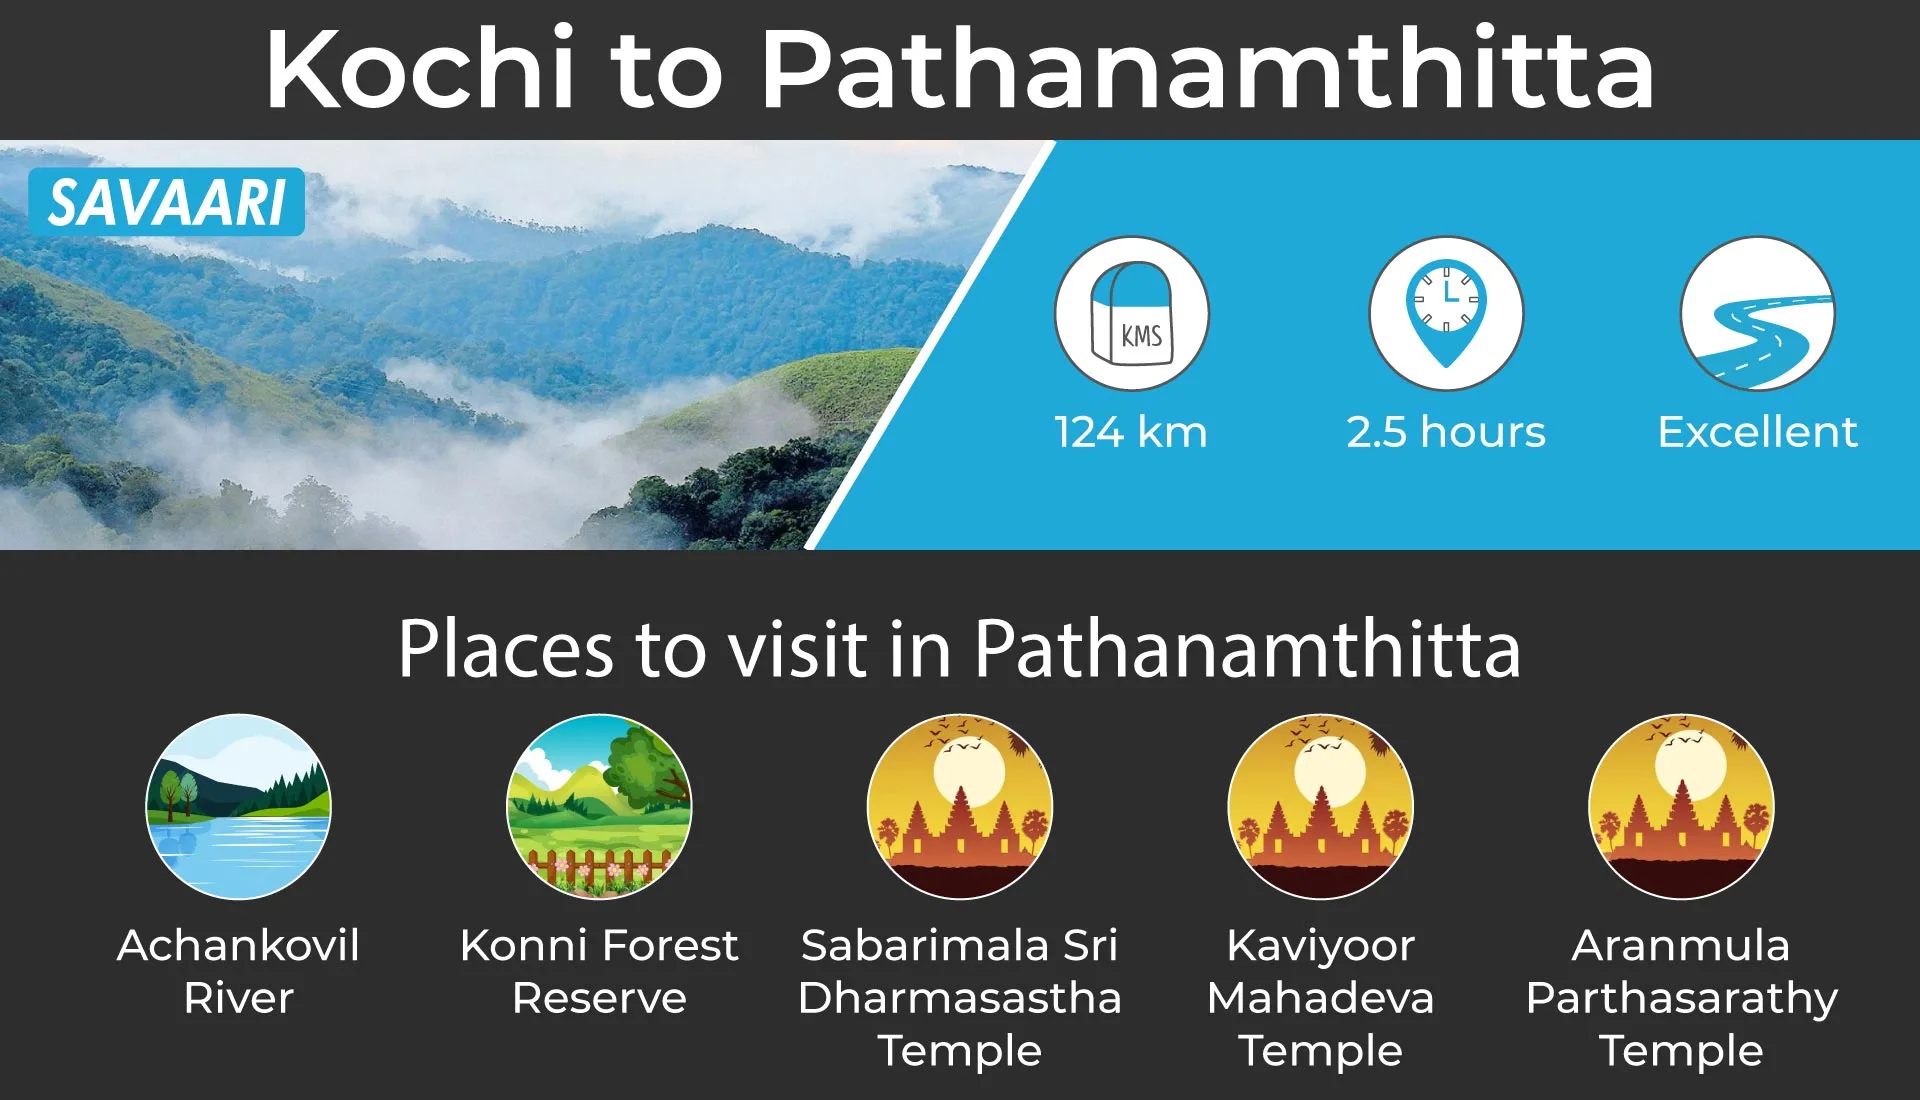 Pathanamthitta weekend getaway by road from Kochi, 